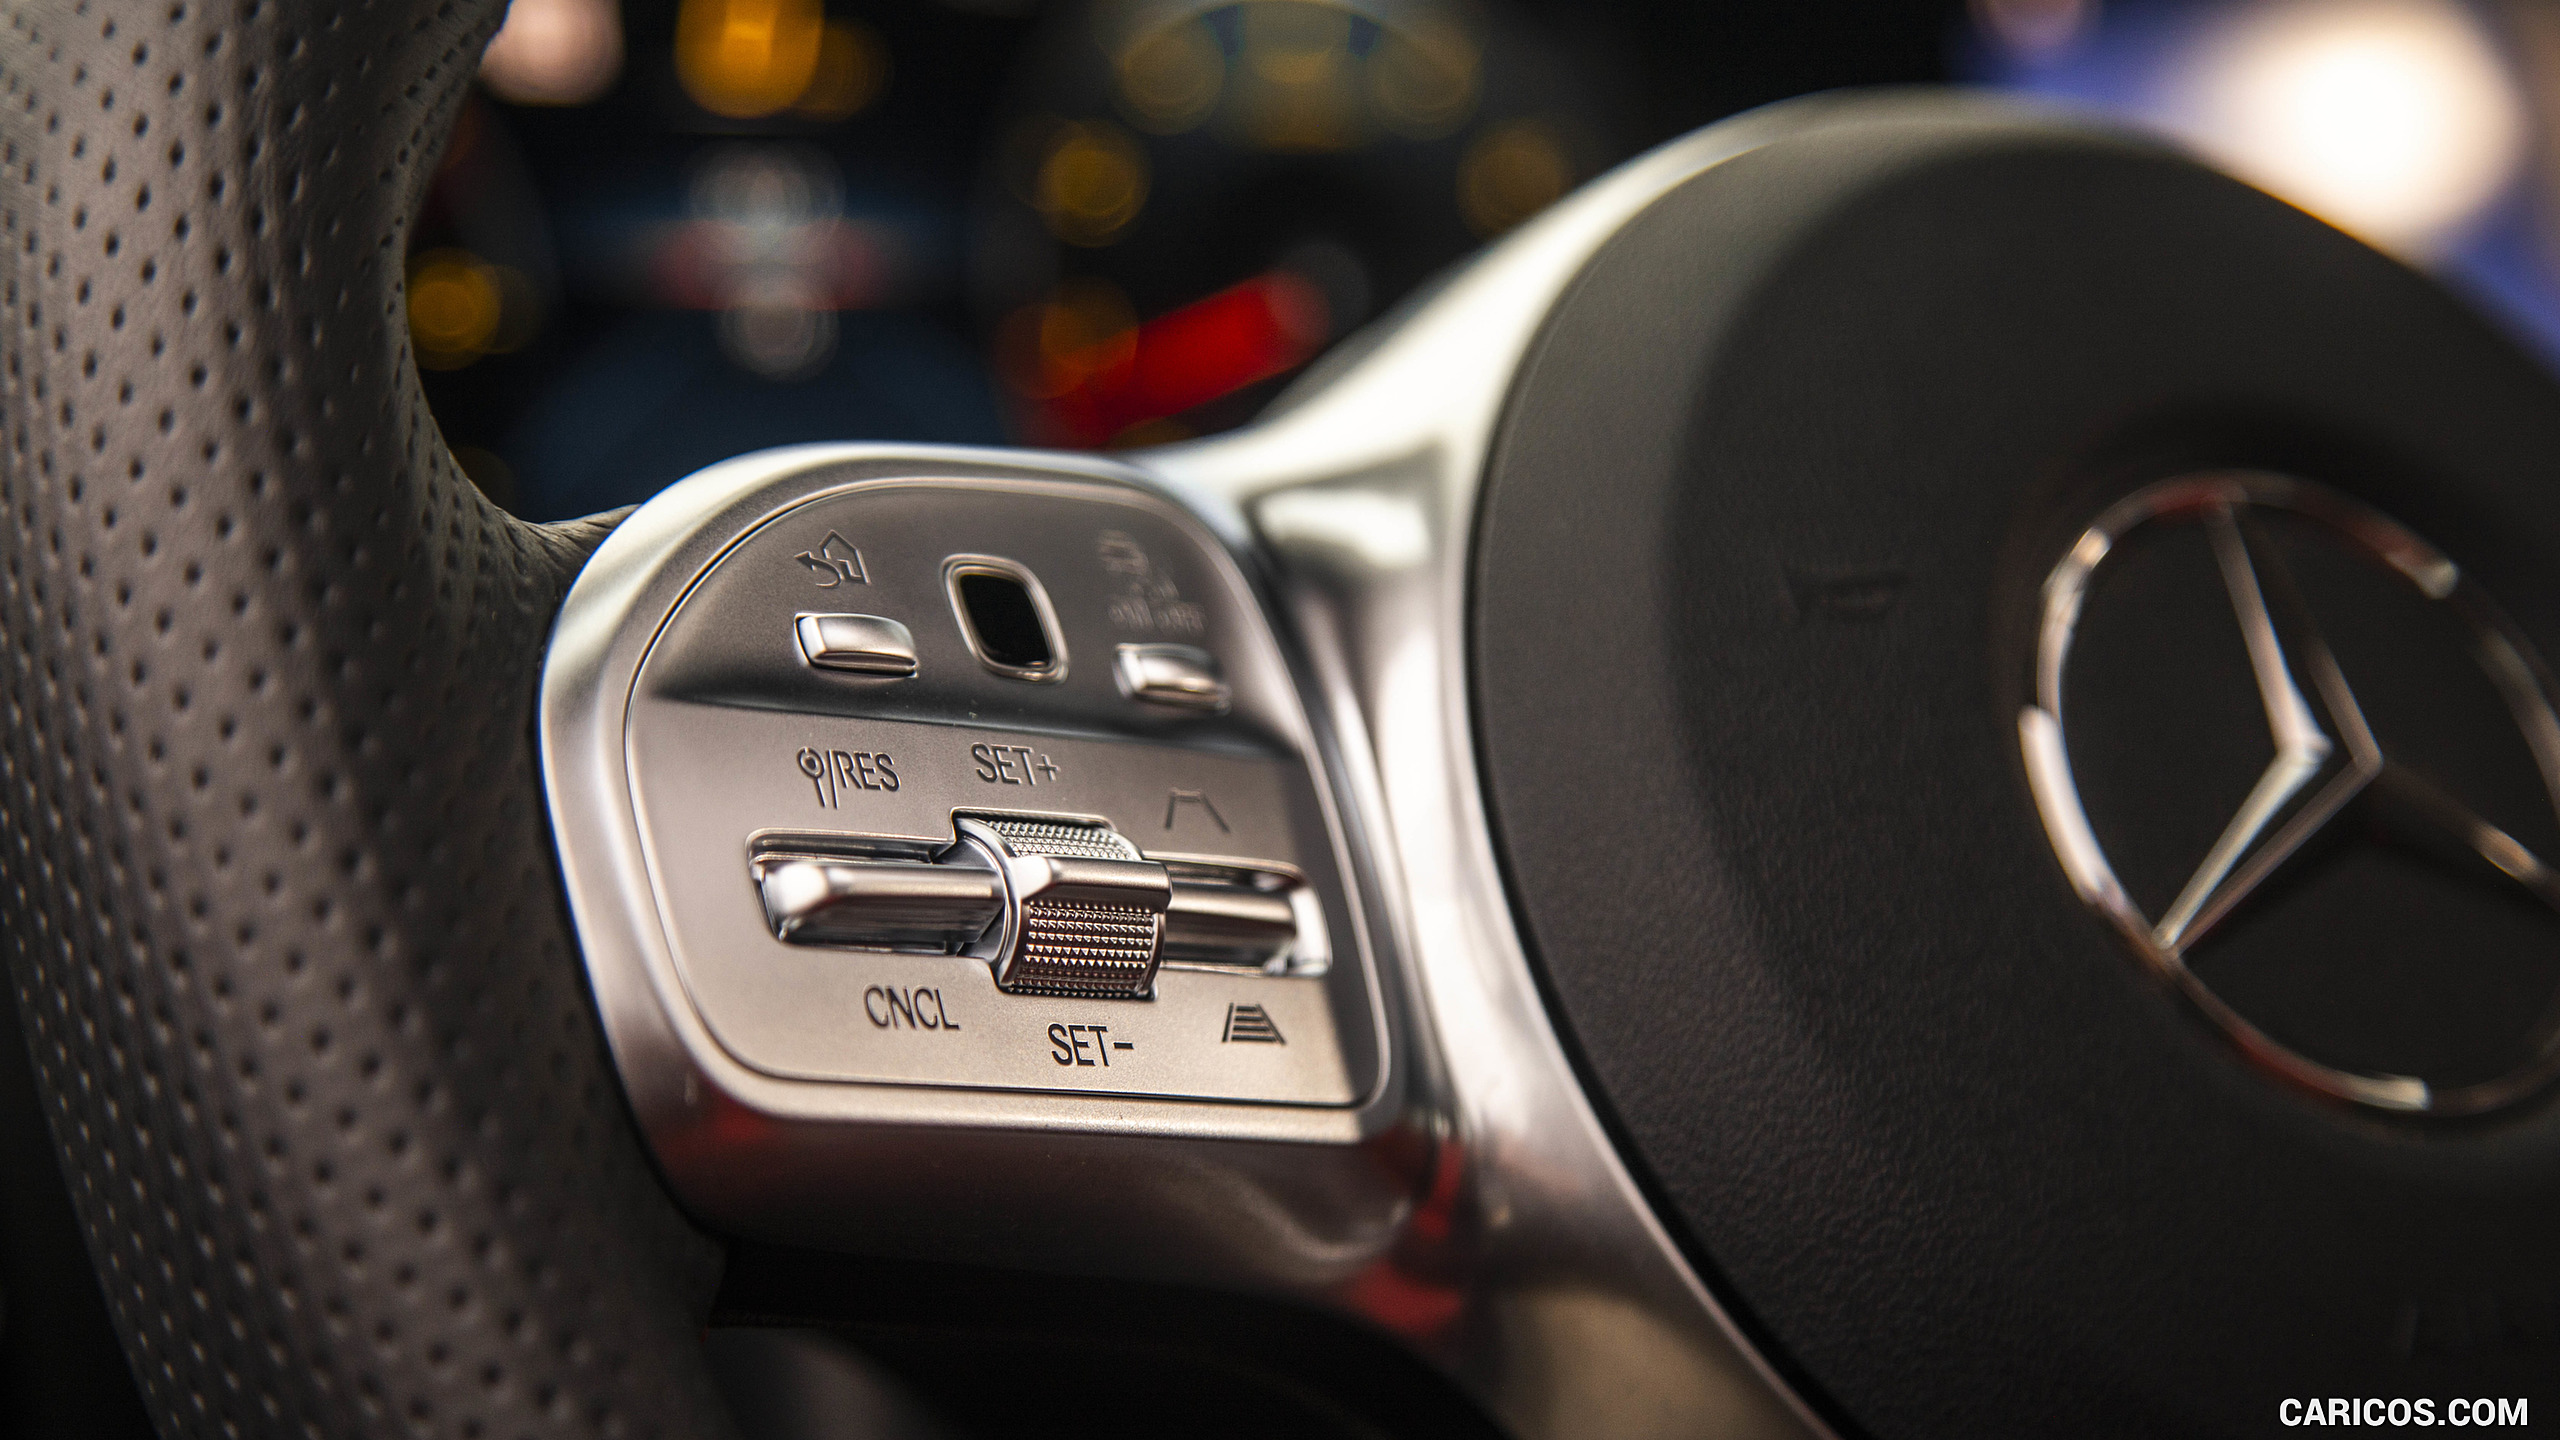 2019 Mercedes-Benz A220 4MATIC Sedan (US-Spec) - Interior, Steering Wheel, #96 of 214